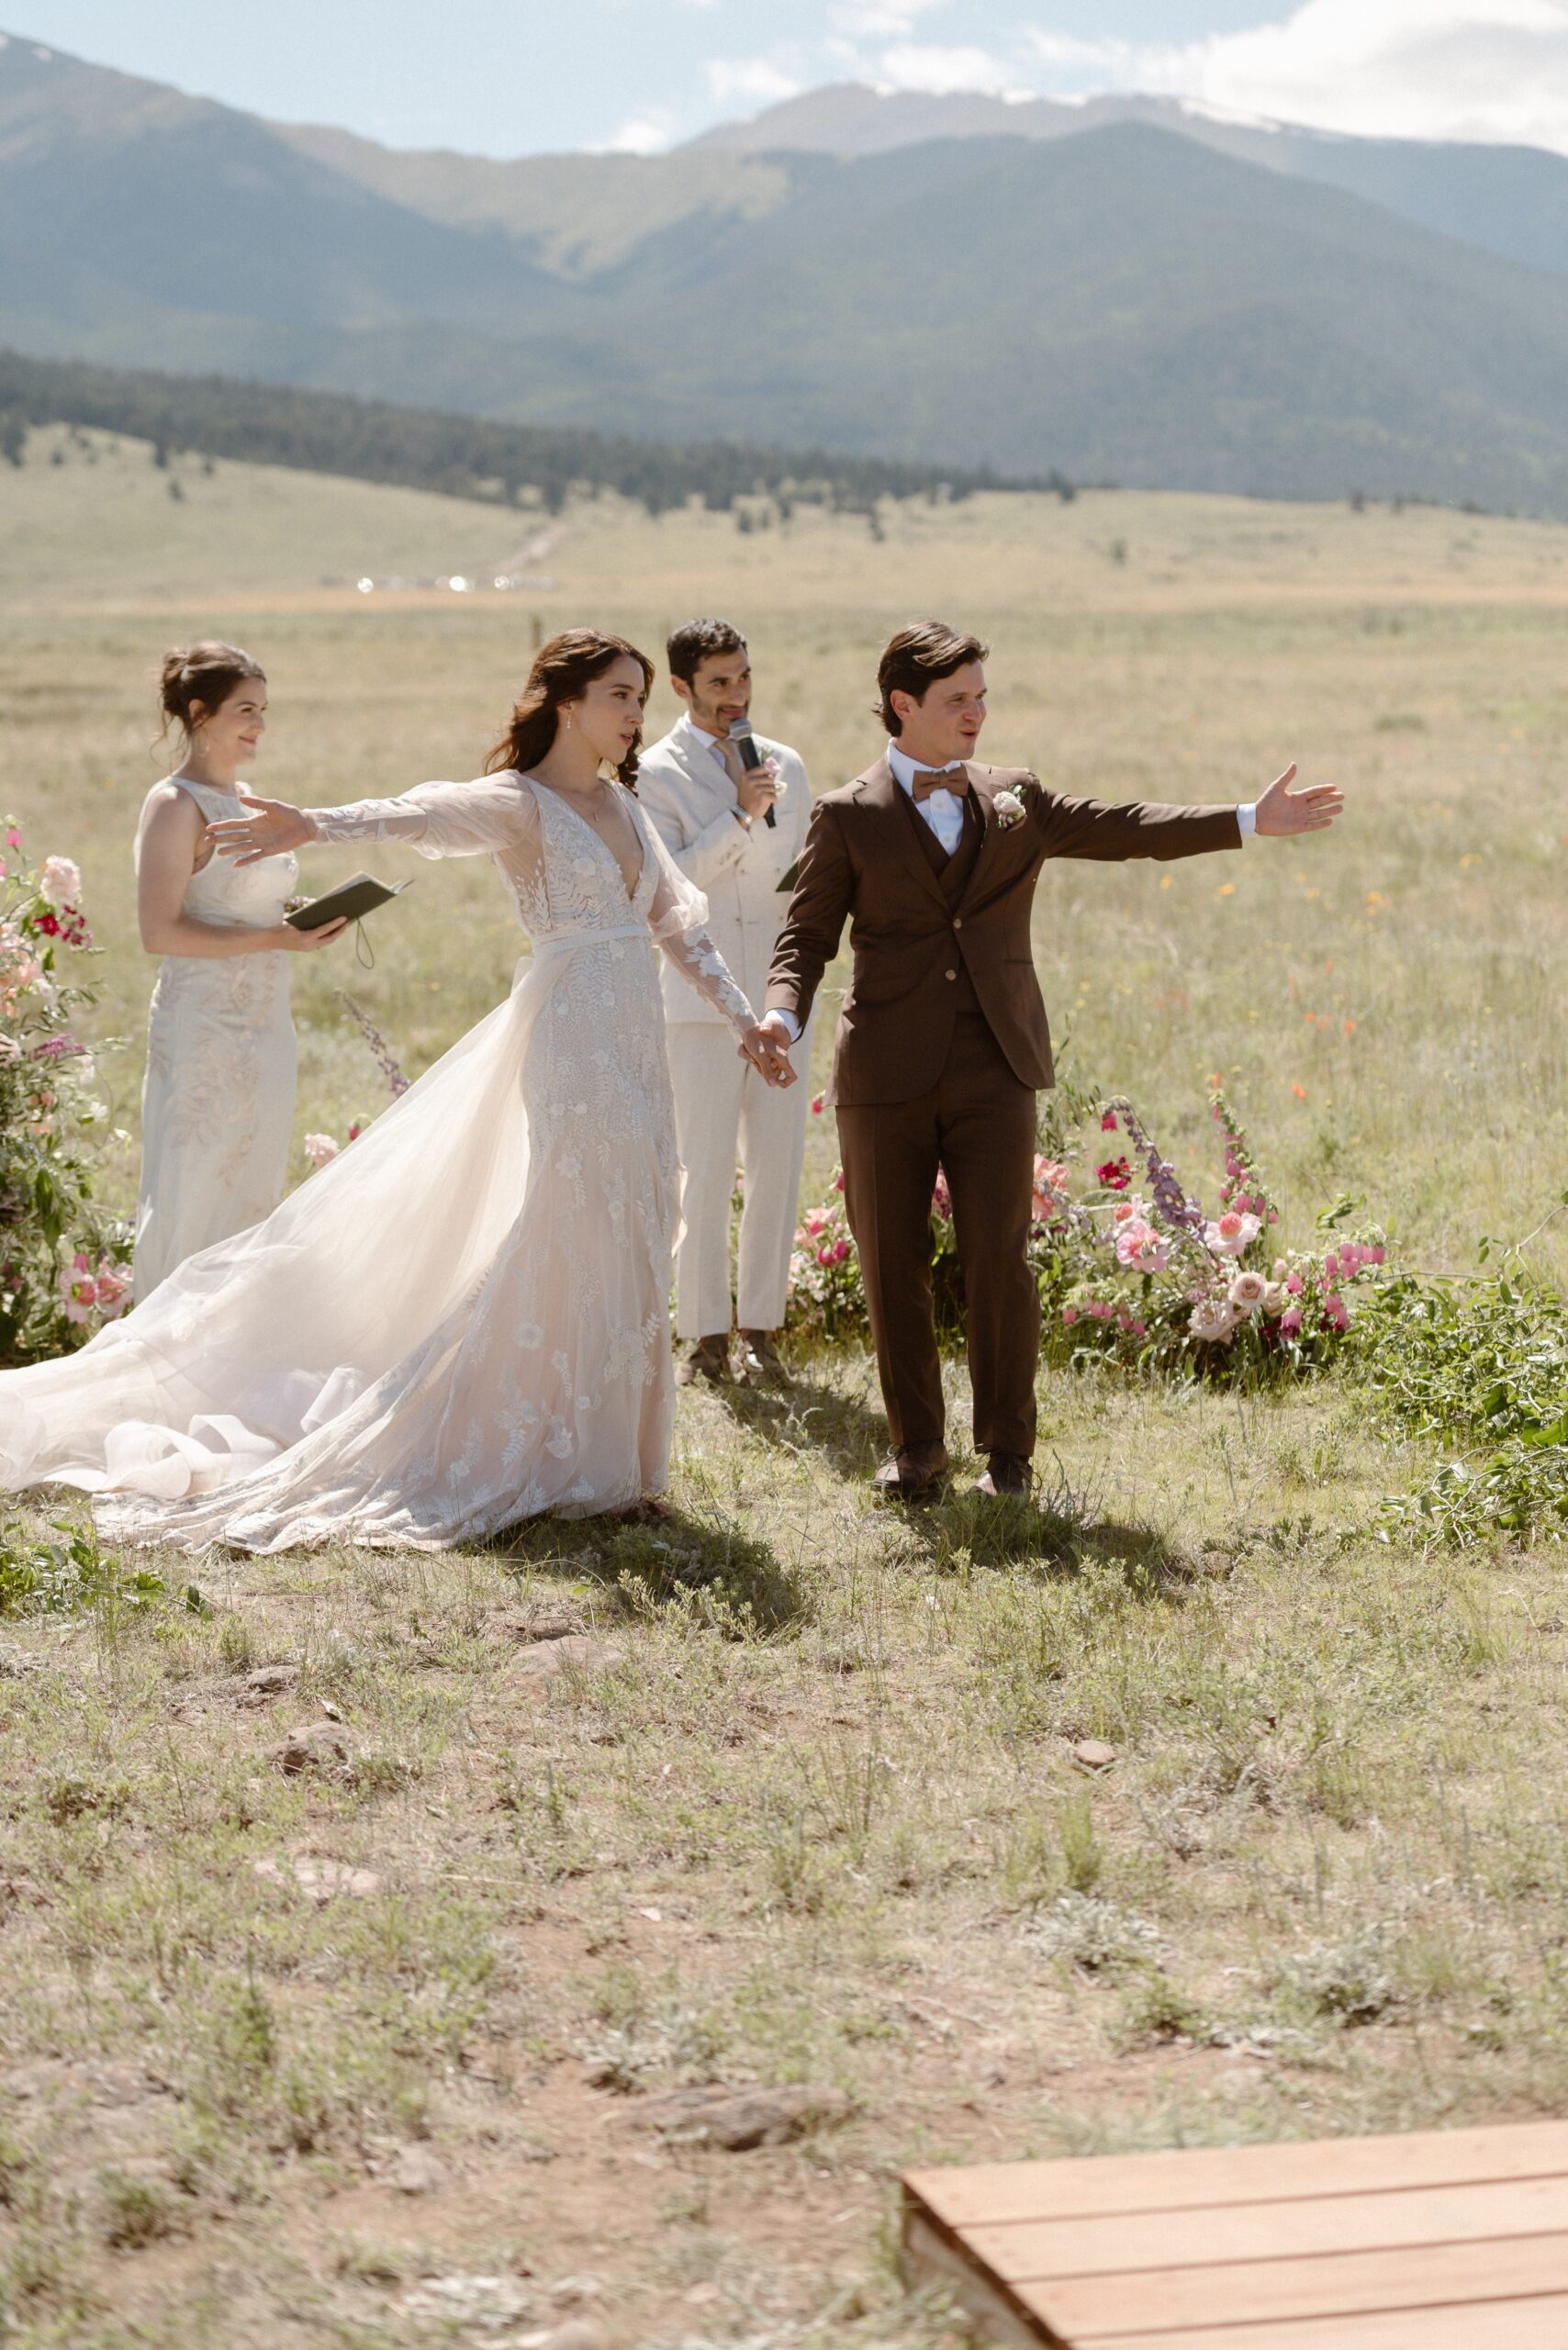 A bride and groom celebrate their wedding ceremony at Three Peaks Ranch. Photo by Colorado wedding photographer Ashley Joyce.